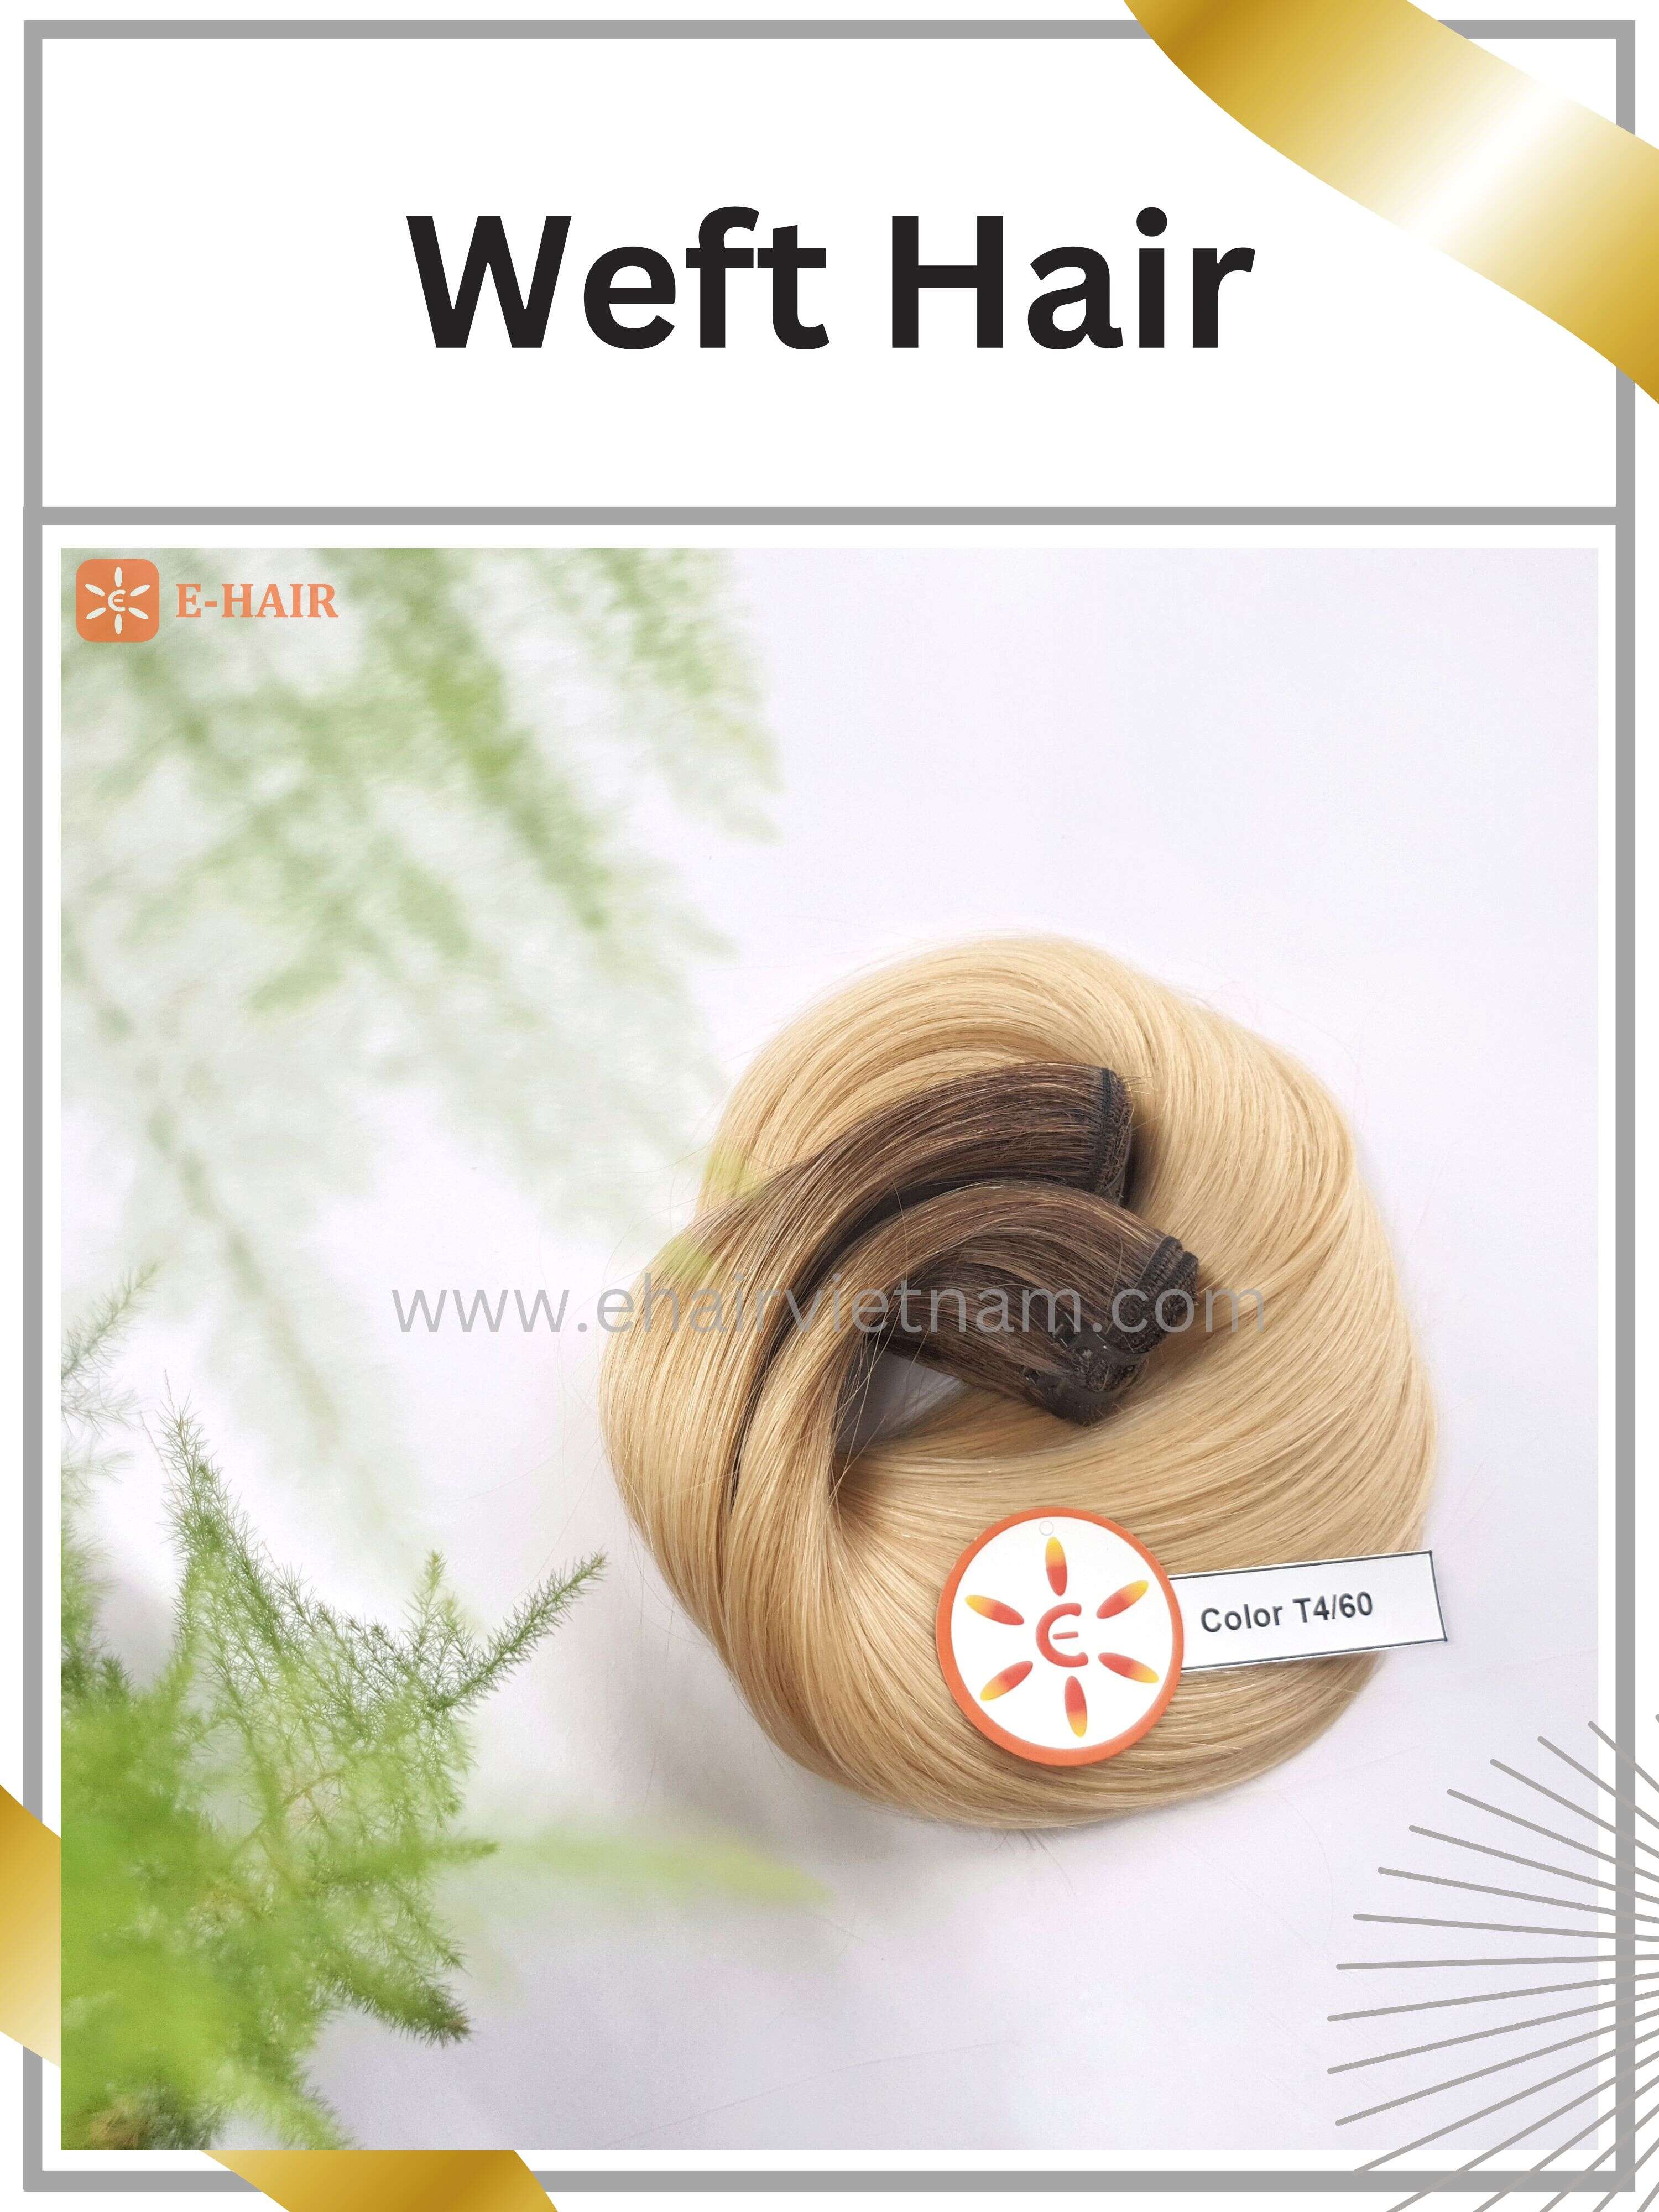 ehairvietnam, hair, hair extensions,wigs, vietnam hair, hair extensions,natural hair, hair extensions,export hair